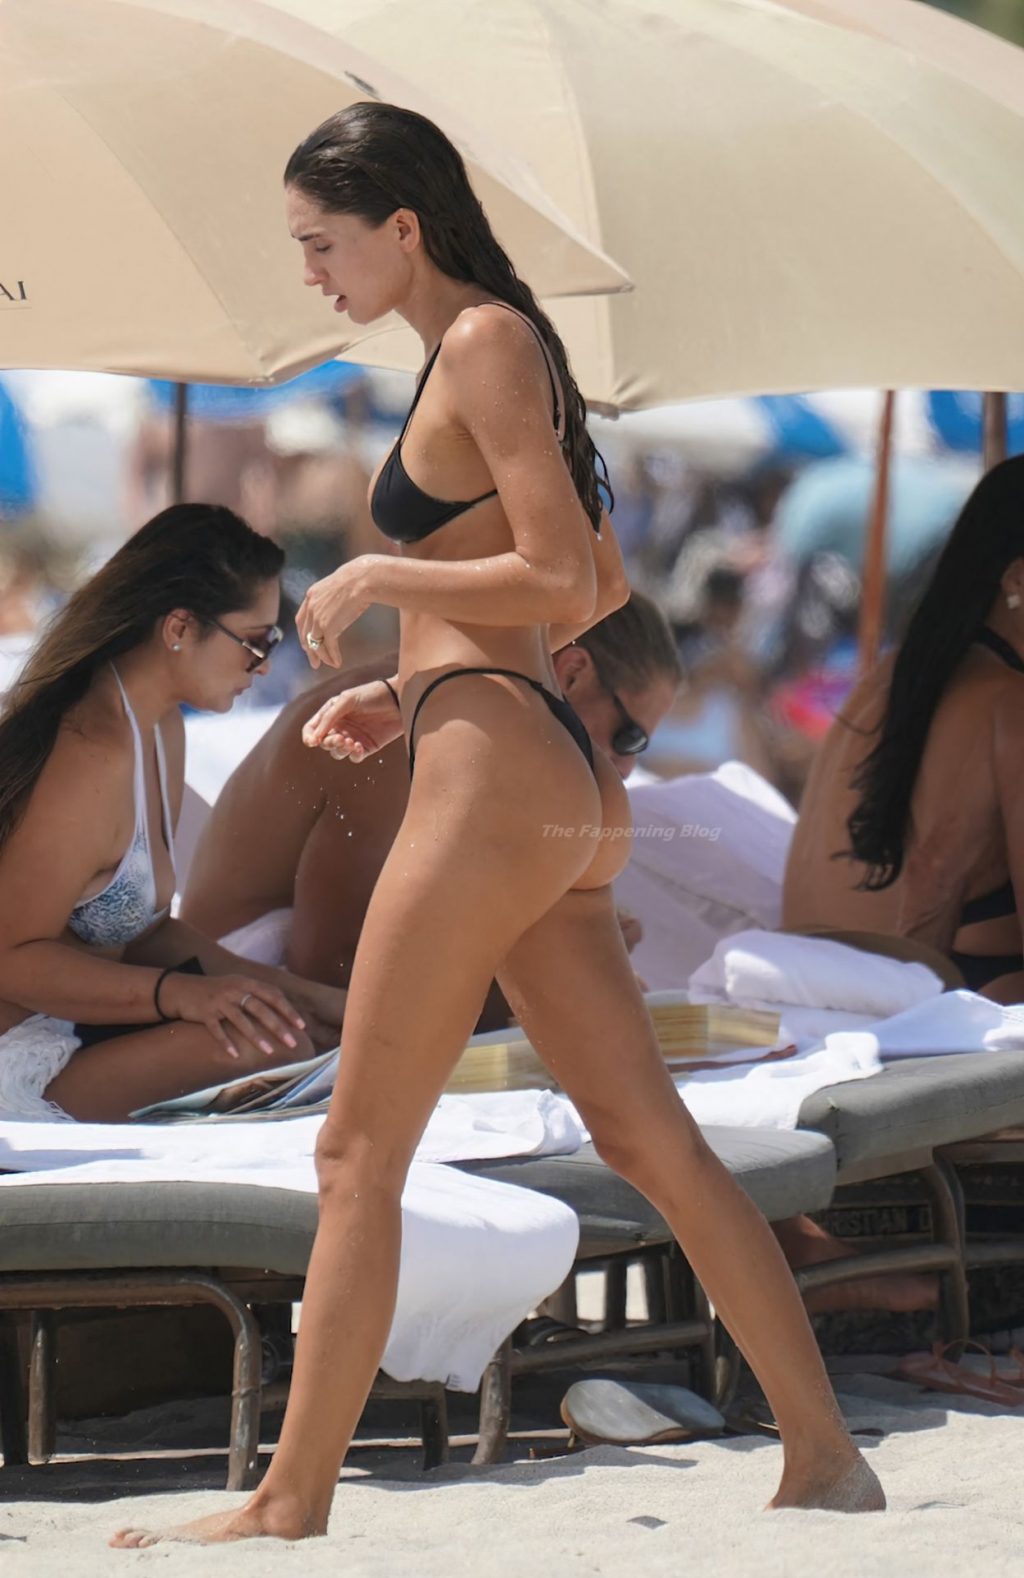 Debbie St Pierre Shows Off Her Stunning Body in a Black Bikini in Miami (29 Photos)